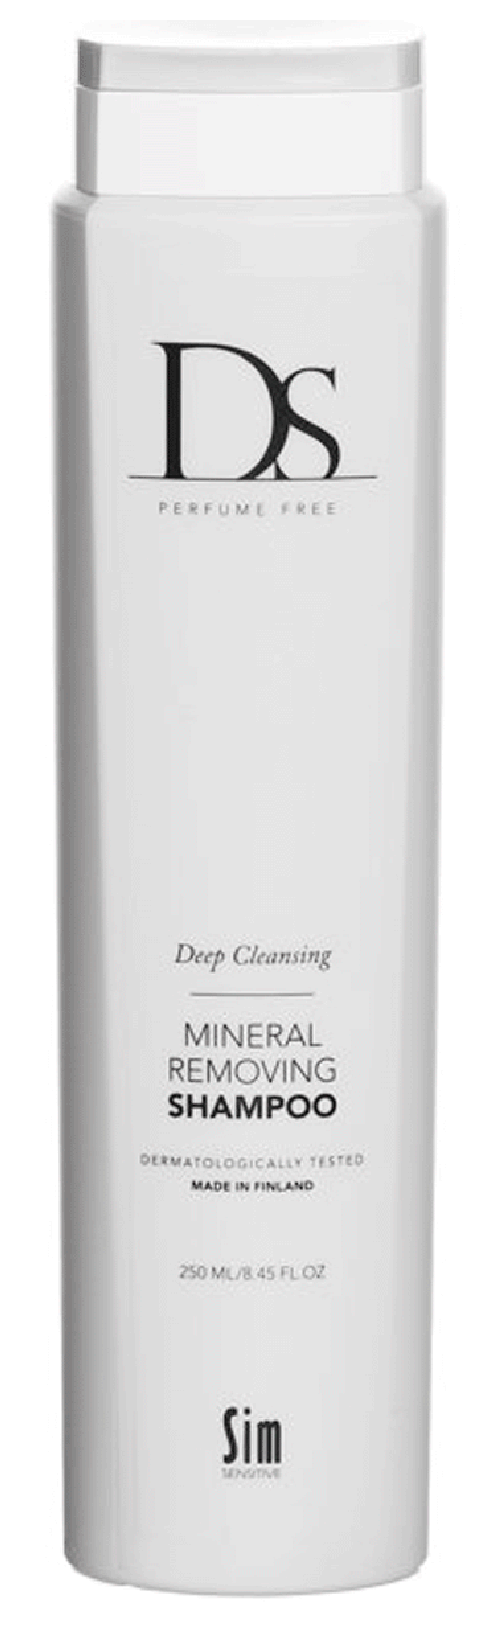 DS Mineral Removing Shampoo шампунь для деминерализации 250мл 